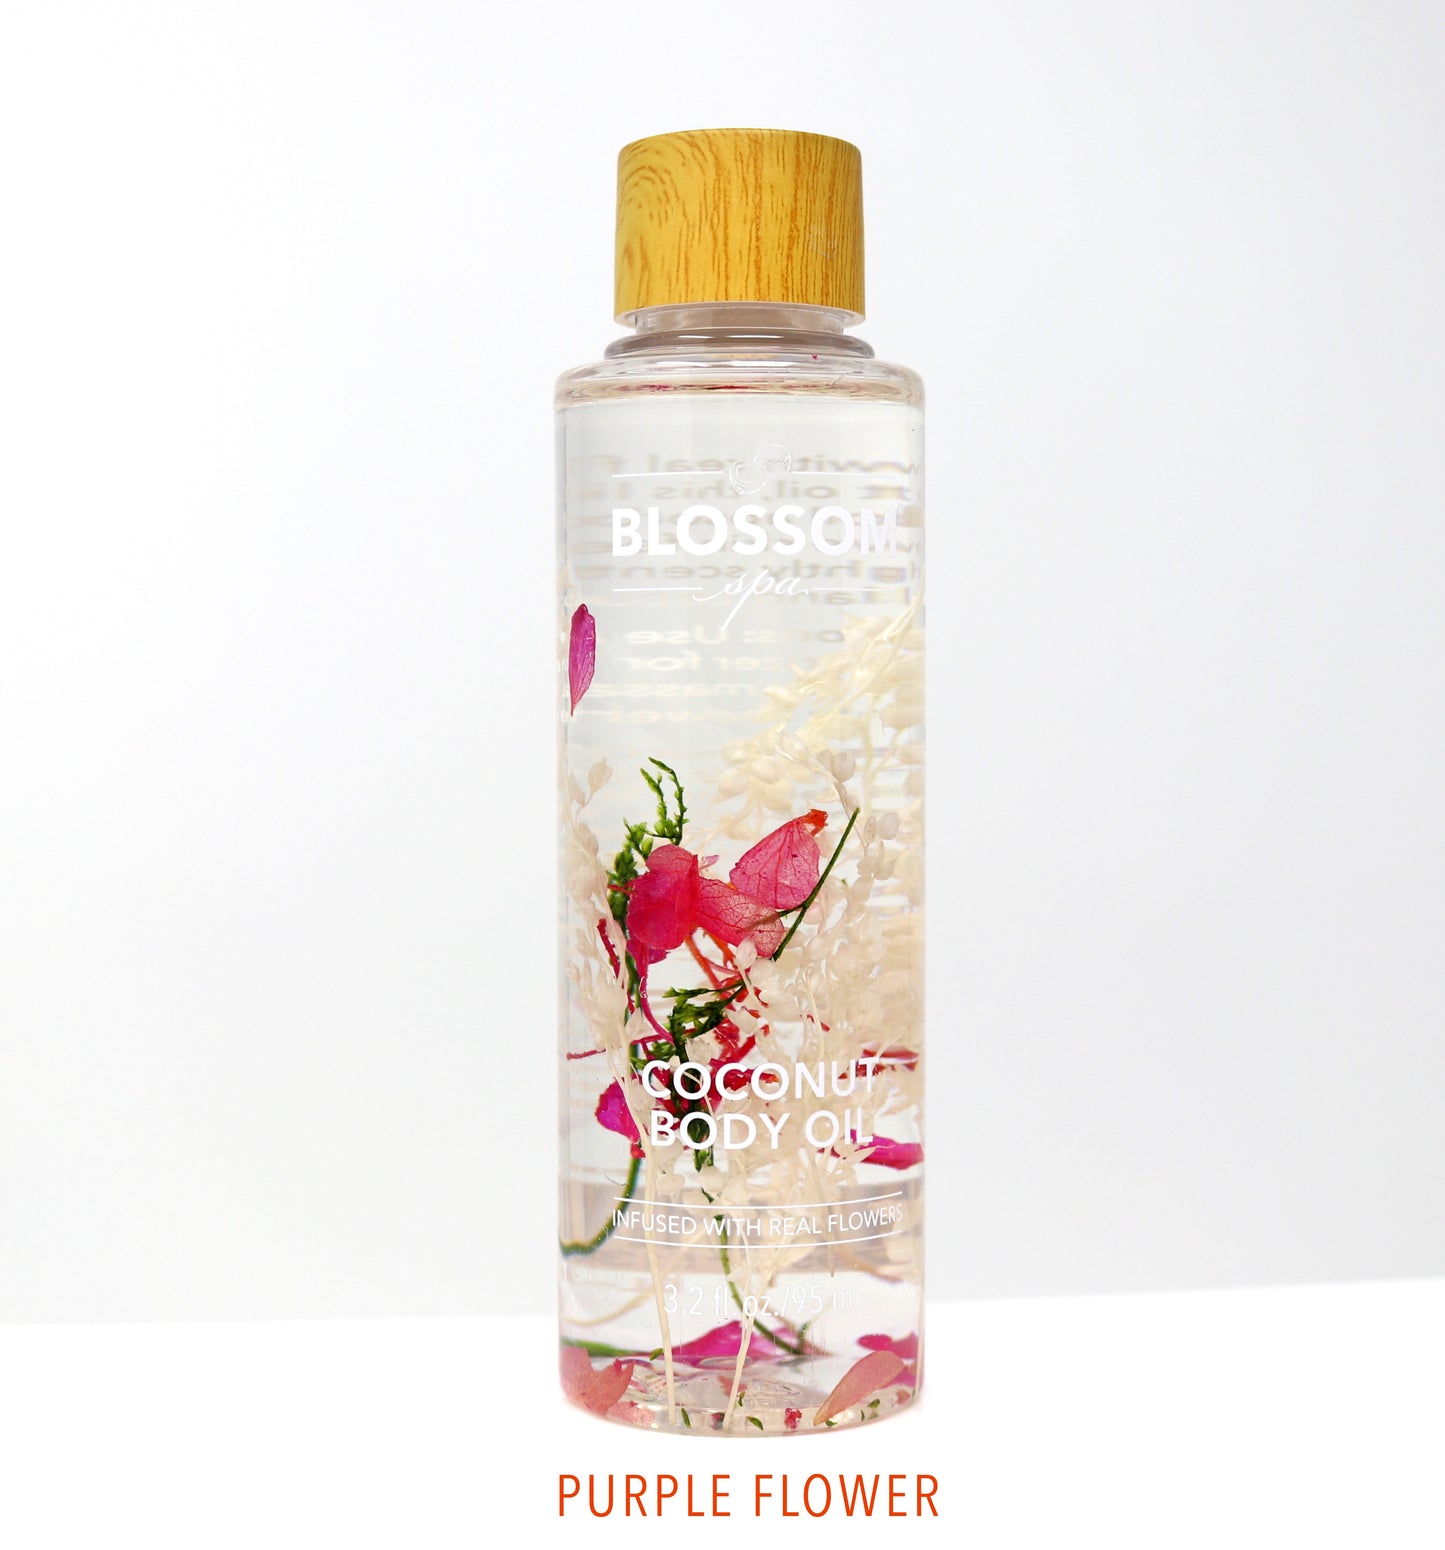 Blossom Spa vegan Coconut Body Oil For Skin Softens Nourishes The Skin 3.2 Oz 1 Pc.